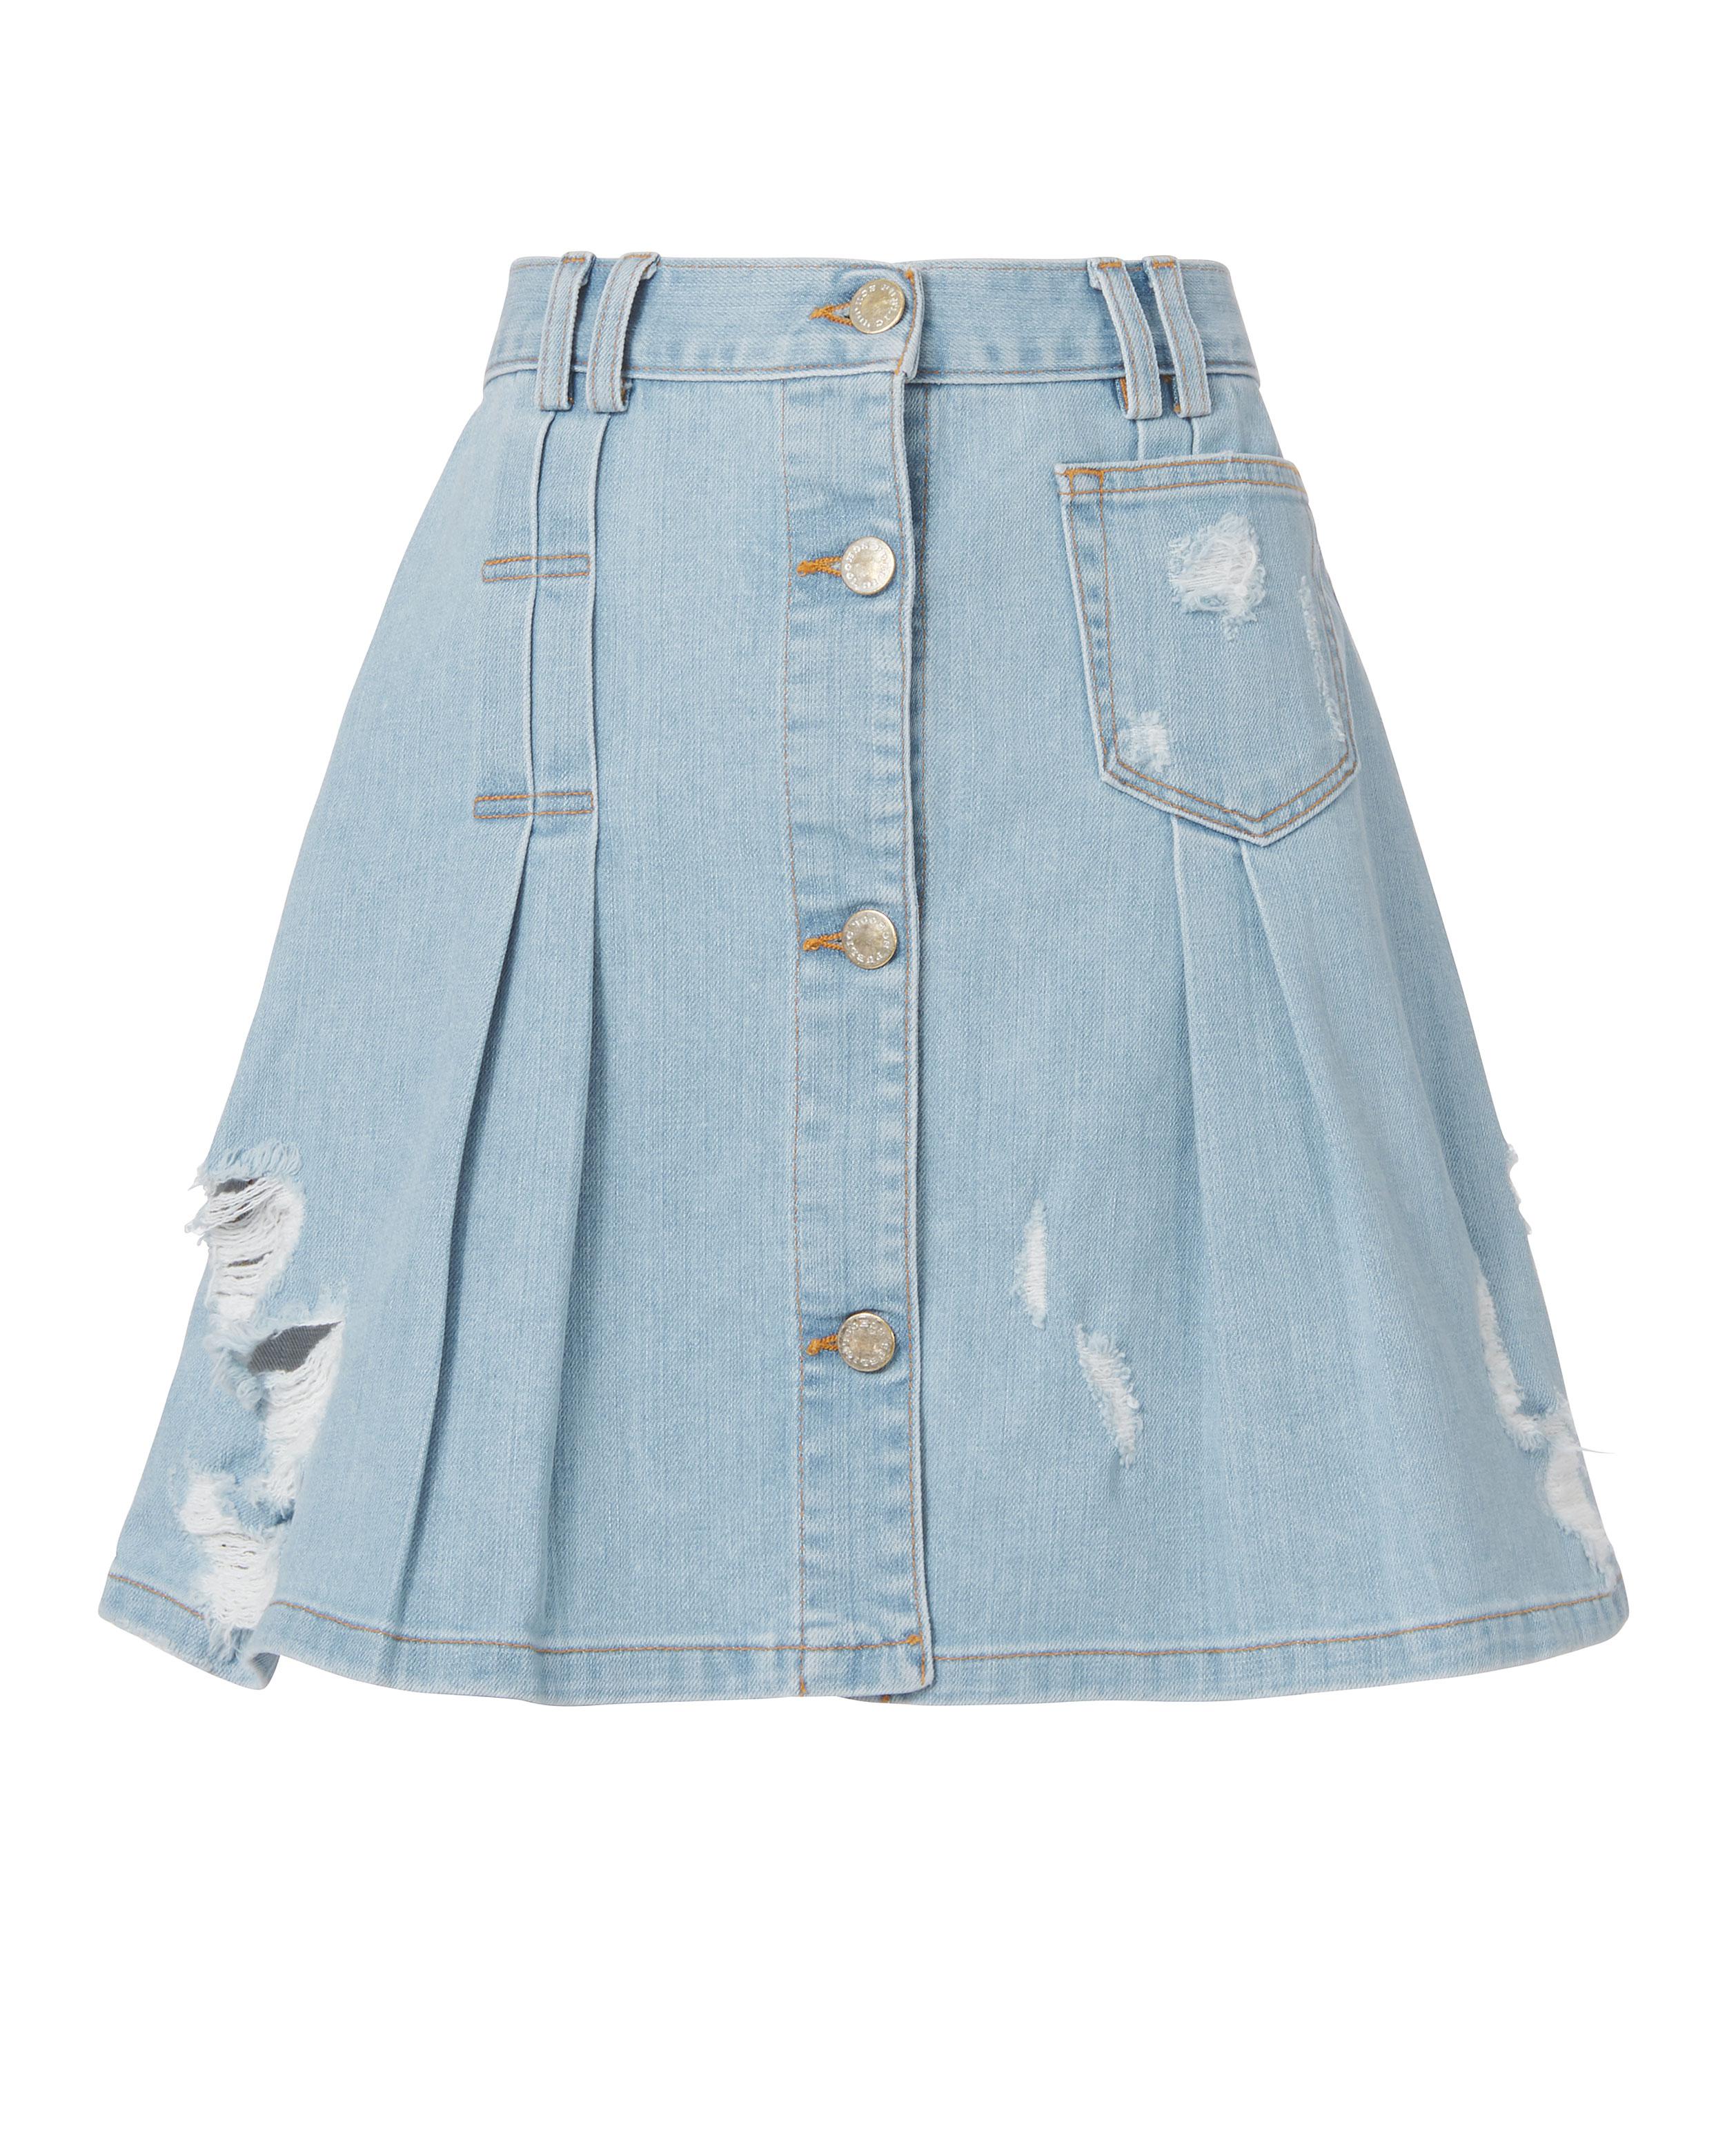 Lyst - Public School Penny Denim Mini Skirt in Blue